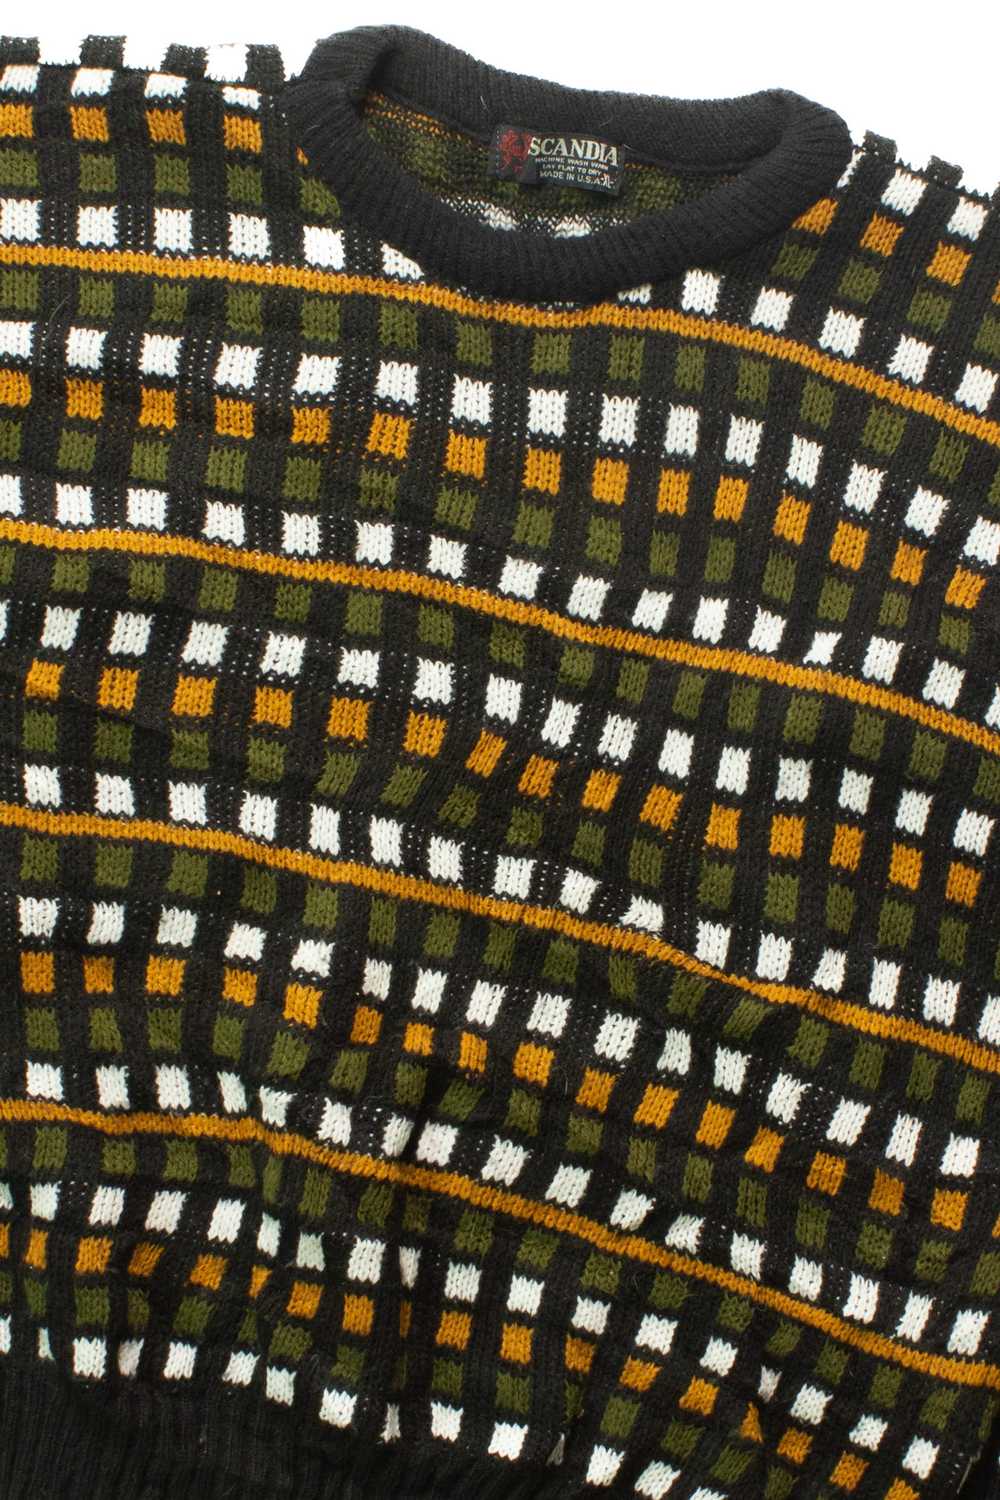 Vintage Scandia 80s Sweater 4377 - image 2